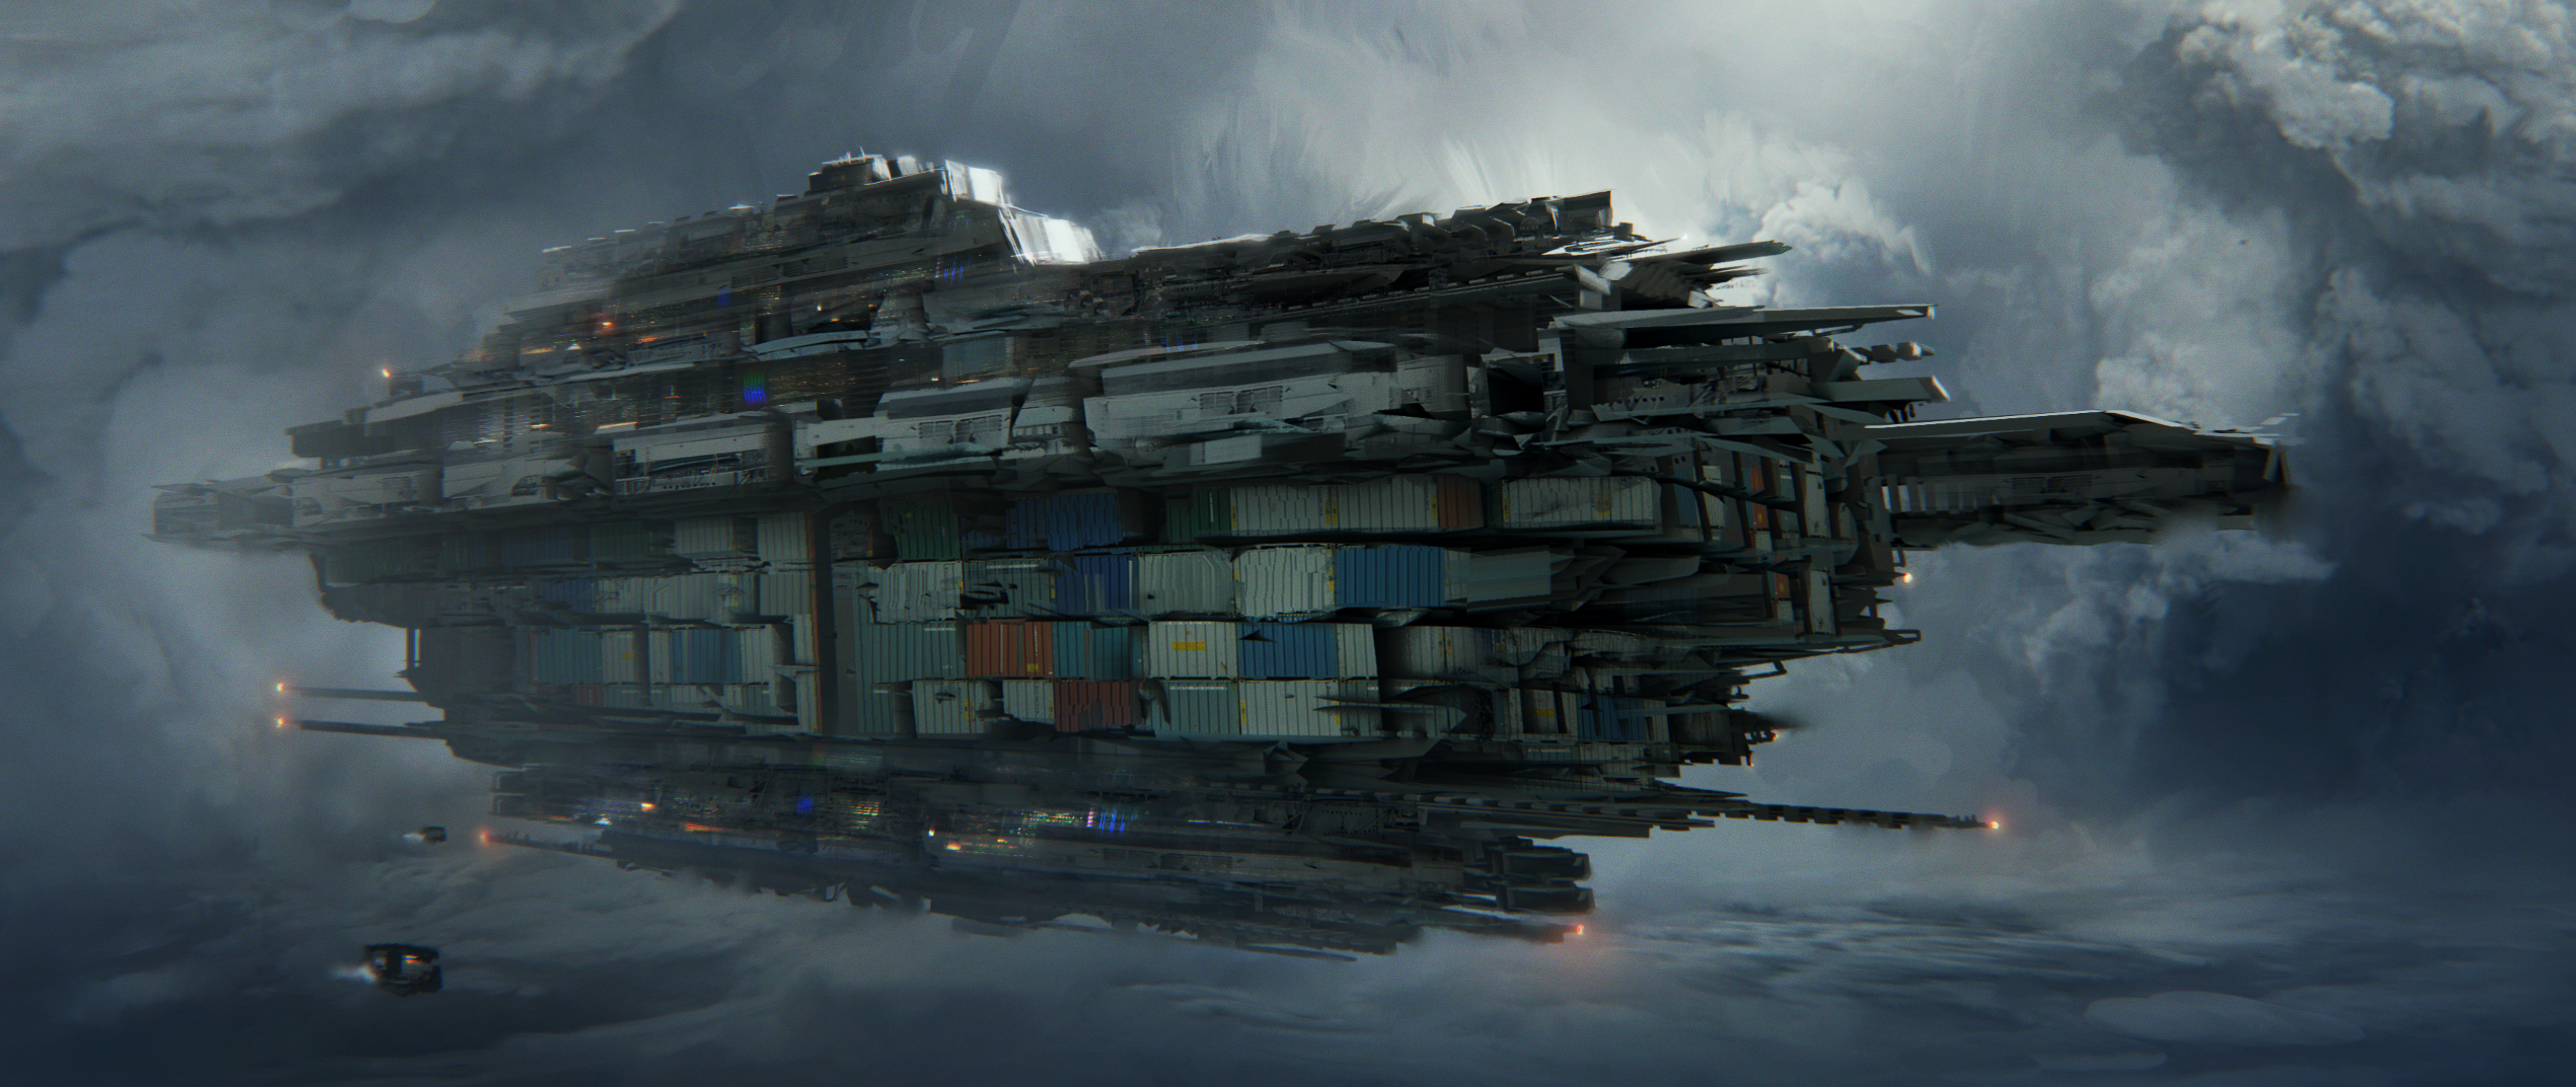 sci fi, spaceship, container ship